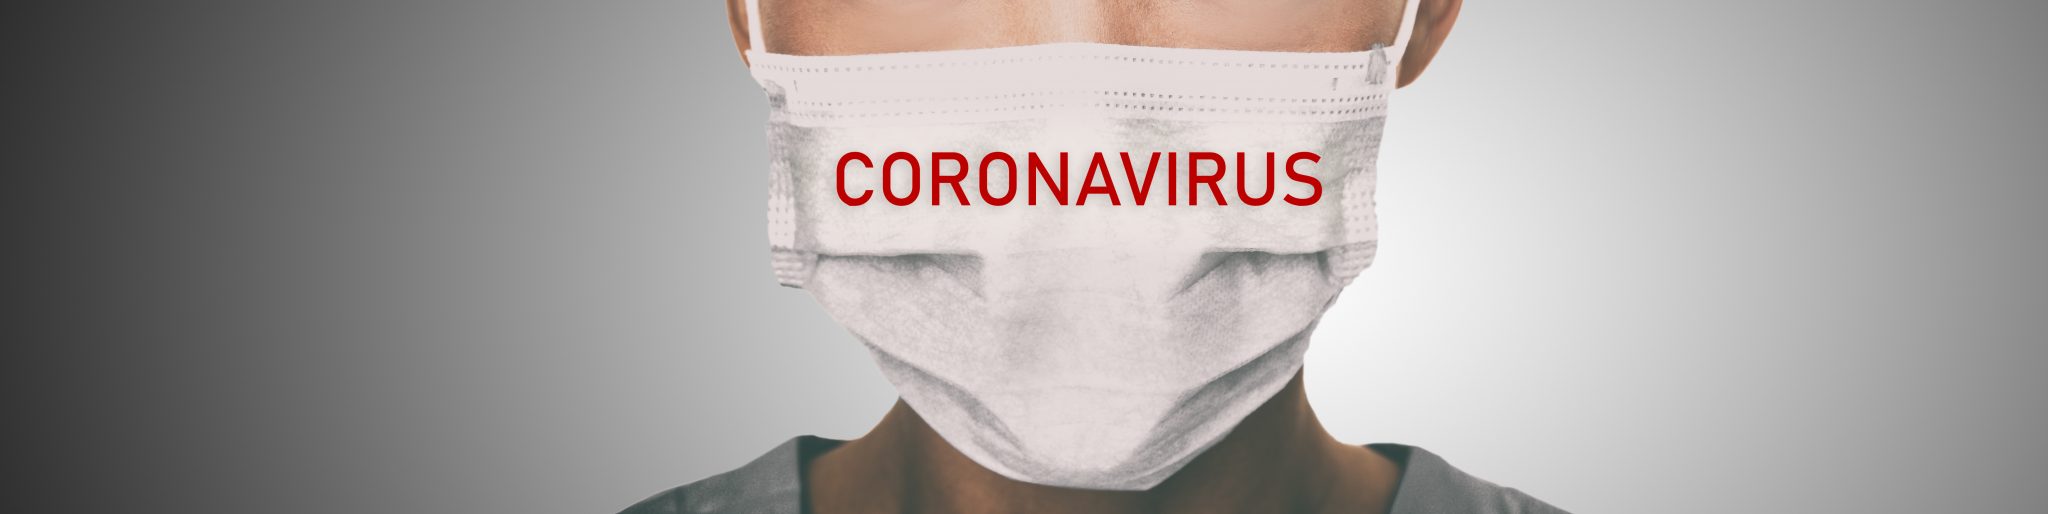 How Effective Are Medical Disinfectants in Fighting Coronavirus